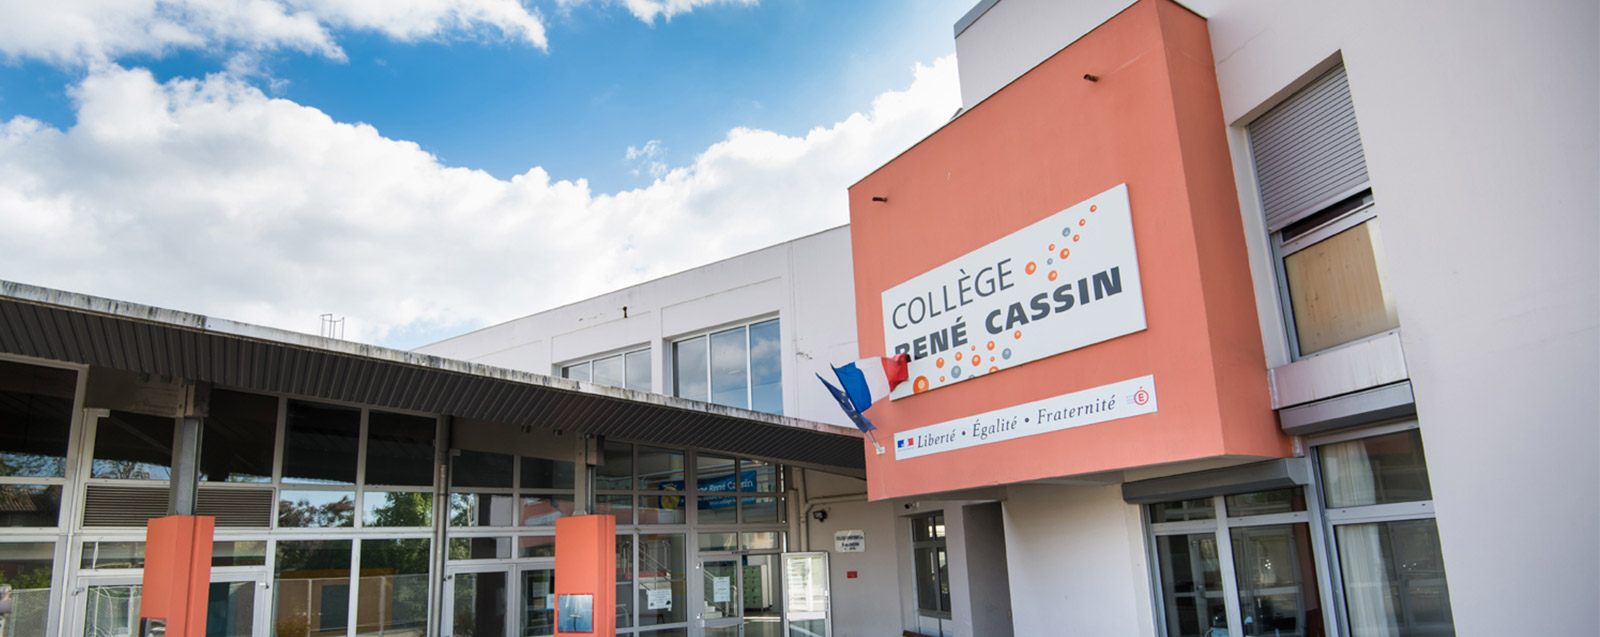 Collège René Cassin